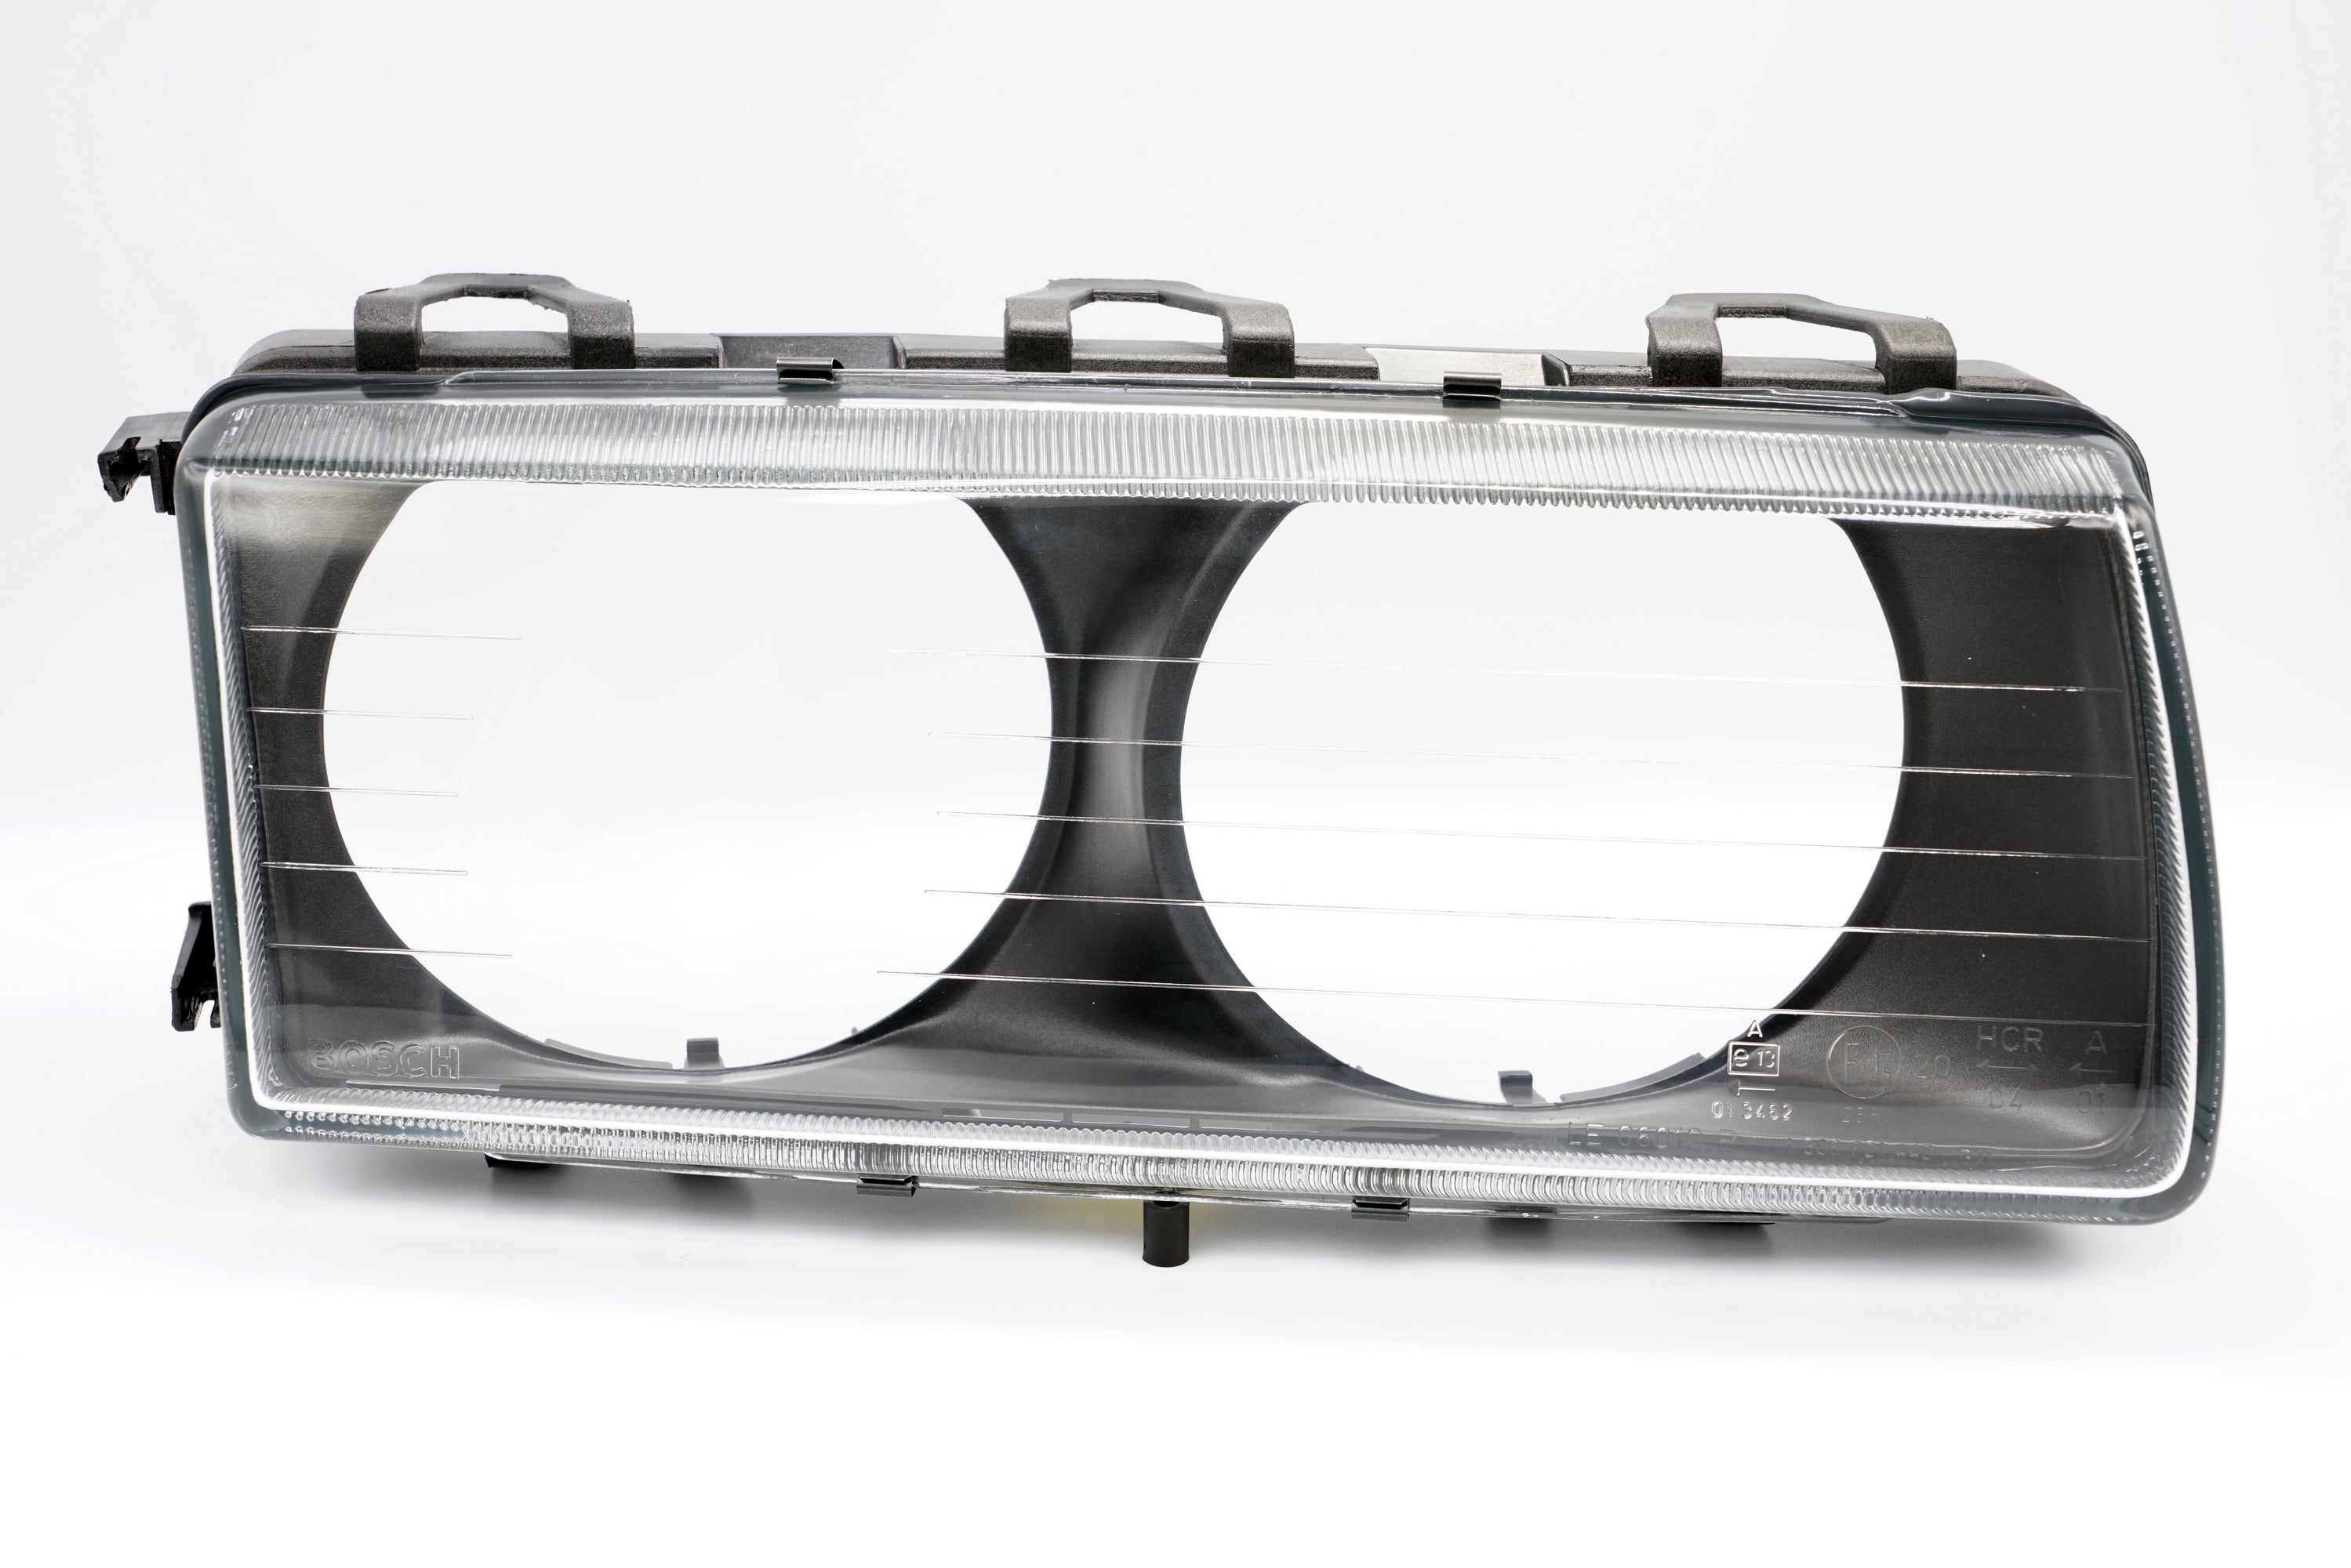 NOS Original Passenger Side Bosch Euro E36 Headlight Lens - H1 Projector